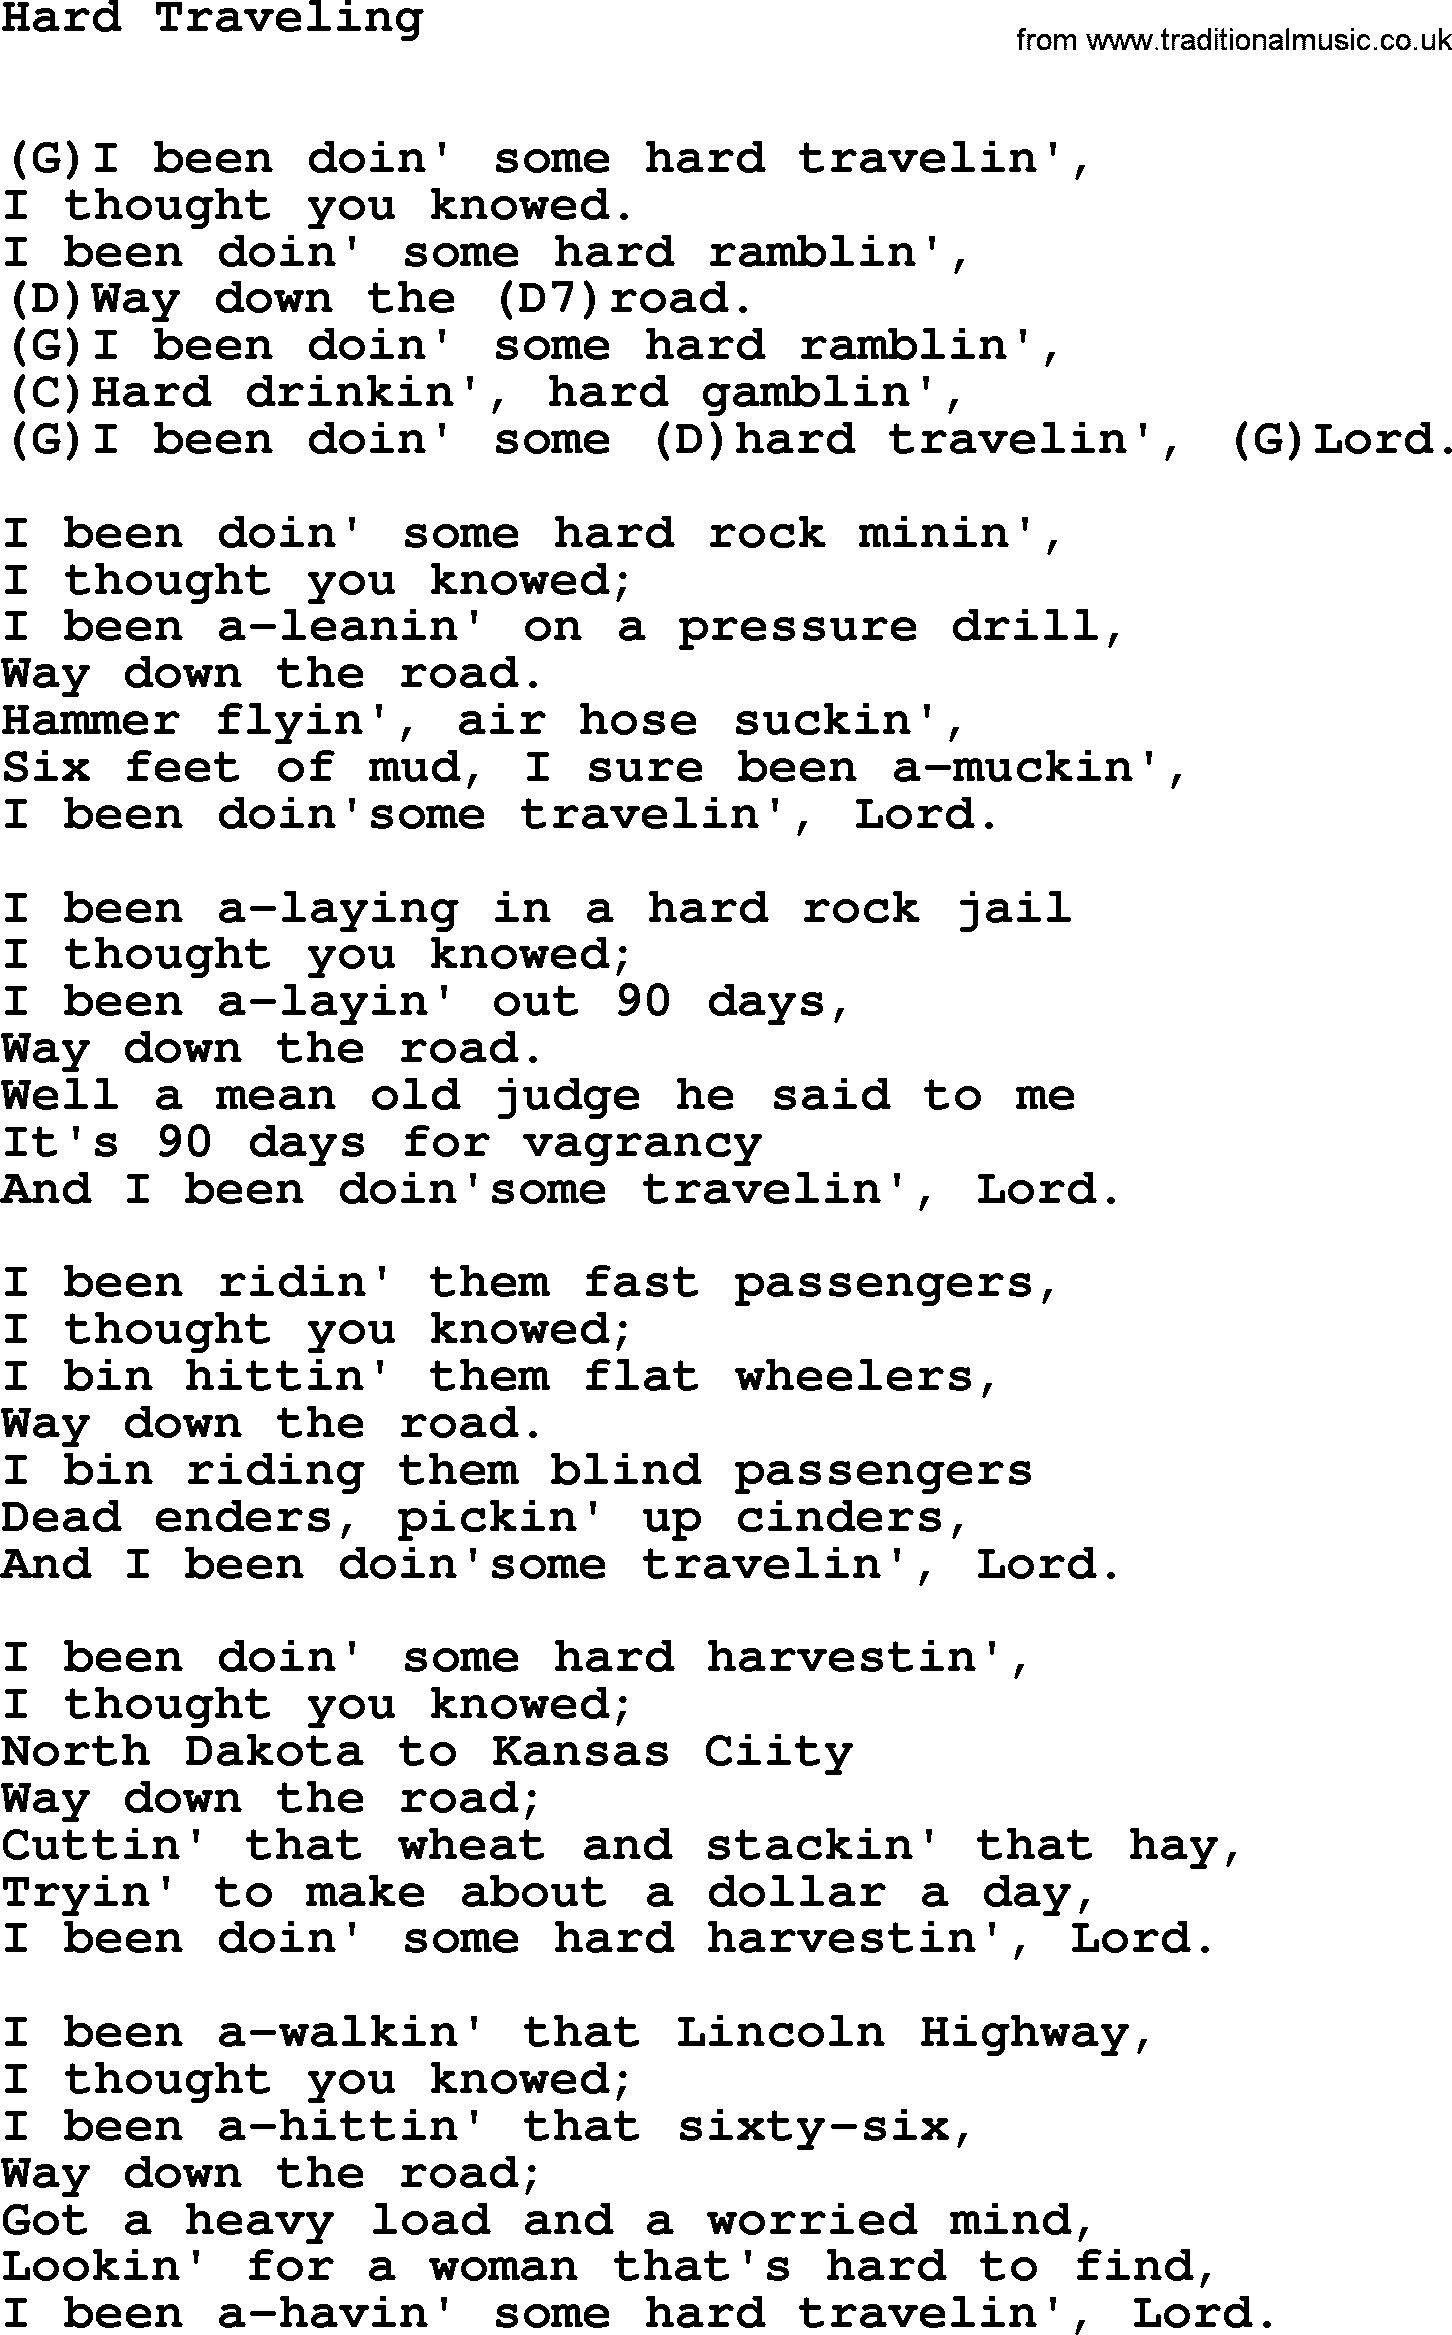 Ralph McTell Song: Hard Traveling, lyrics and chords